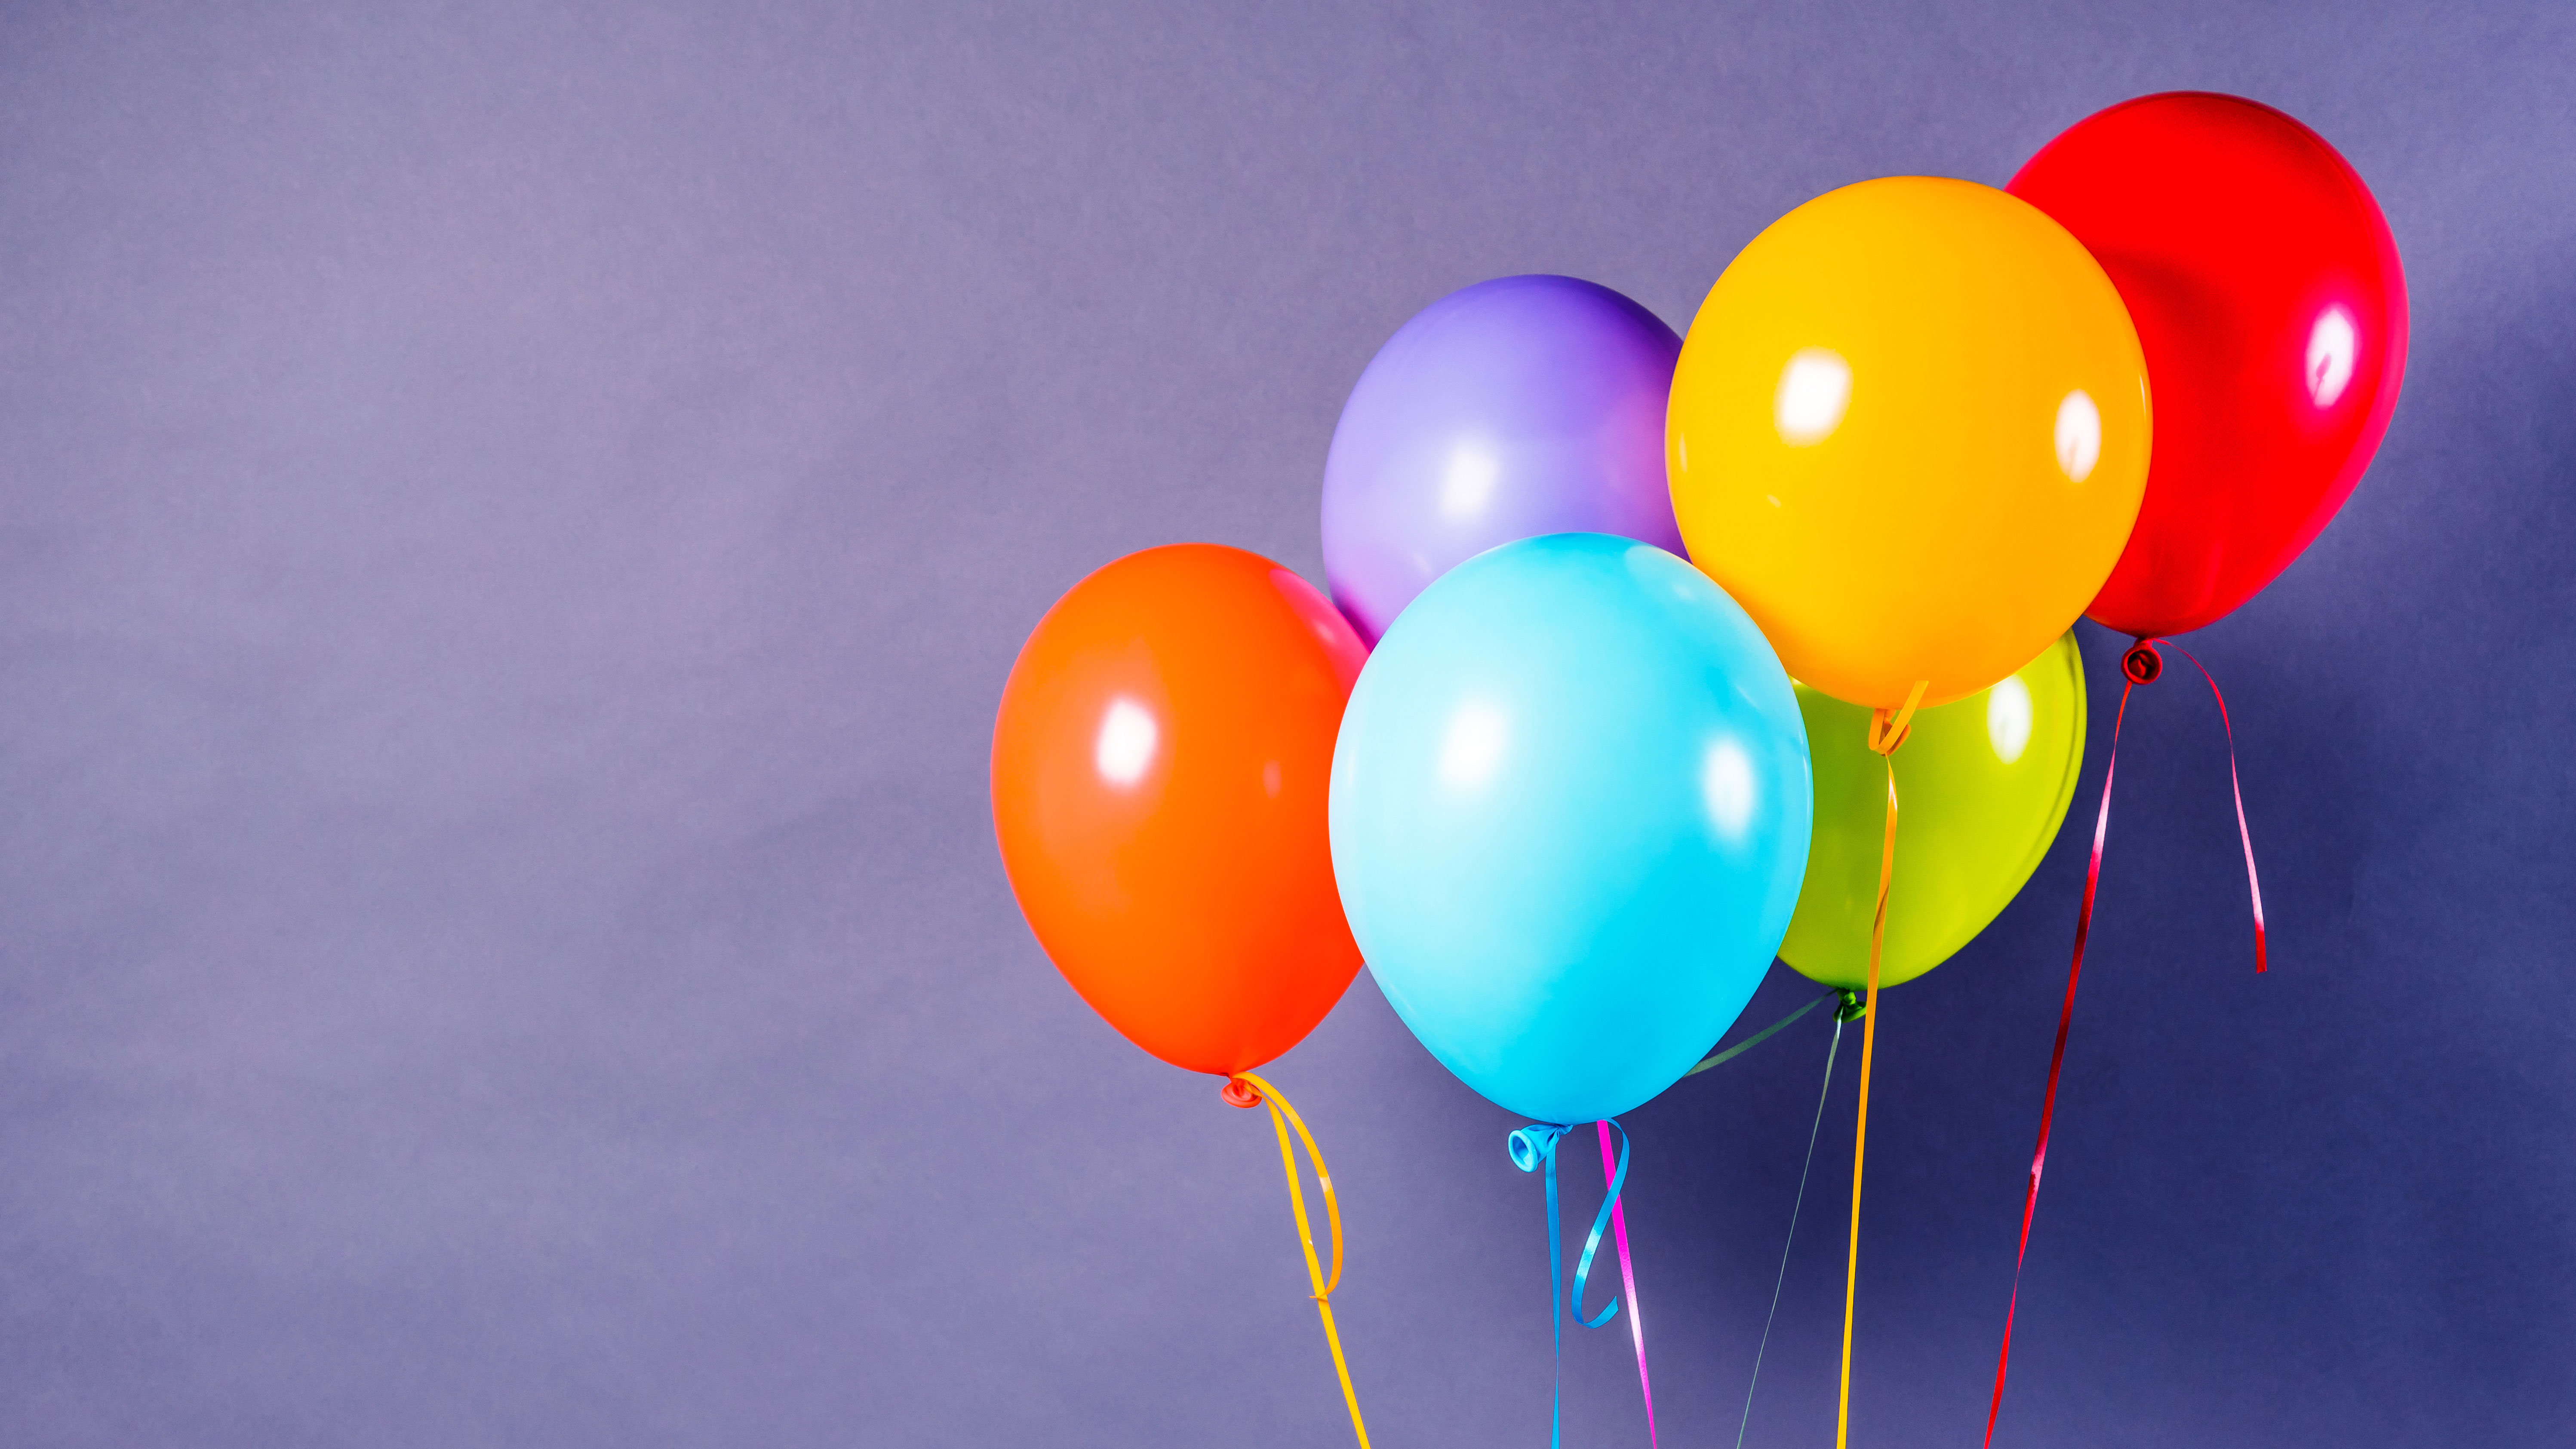 bunte Luftballone mit Heliumgas gefüllt, Copyright Panthermedia